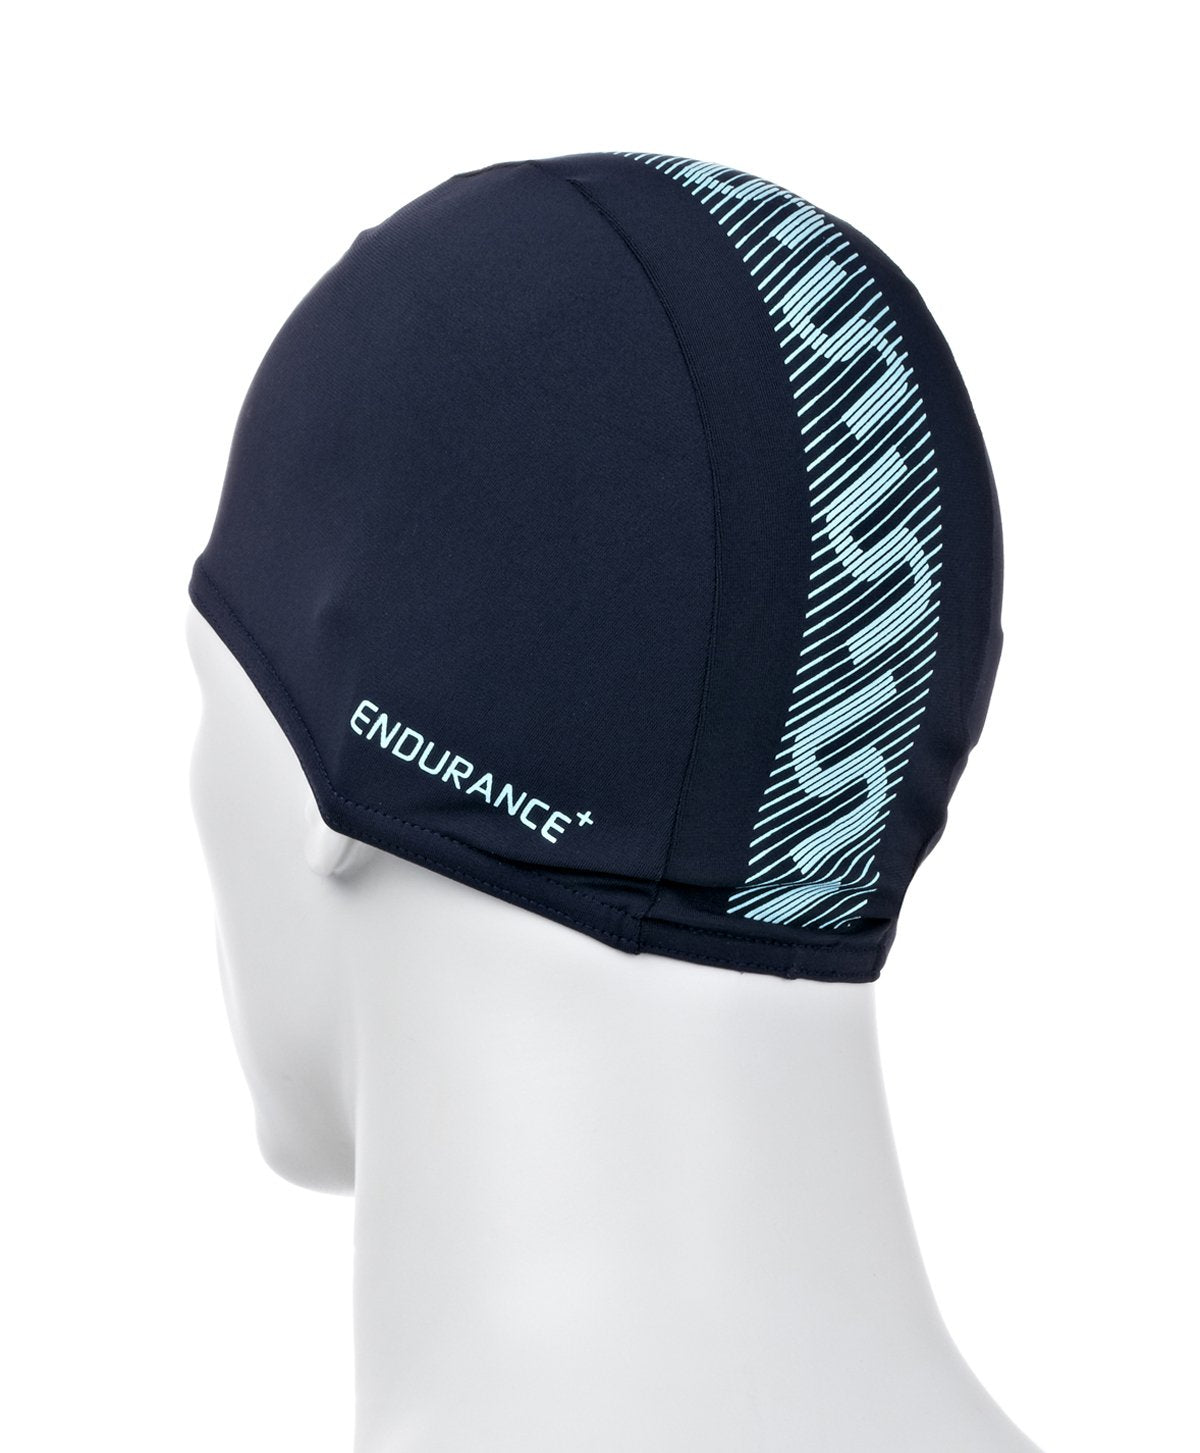 Speedo Monogram Swimcap (Navy Blue) - Best Price online Prokicksports.com